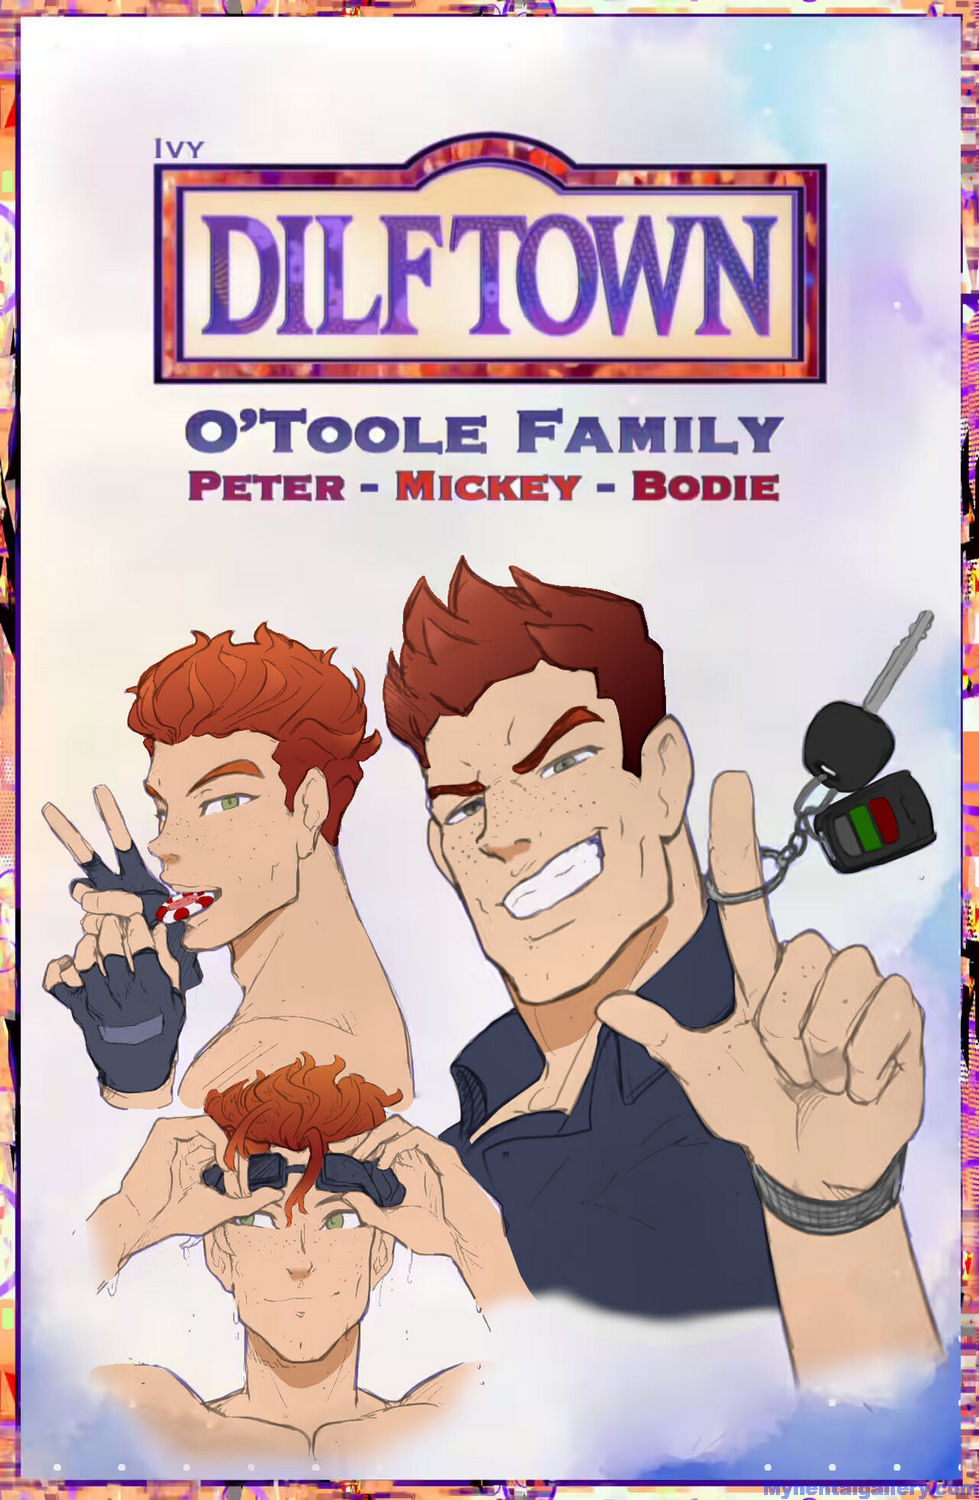 Dilftown - O'Toole Family